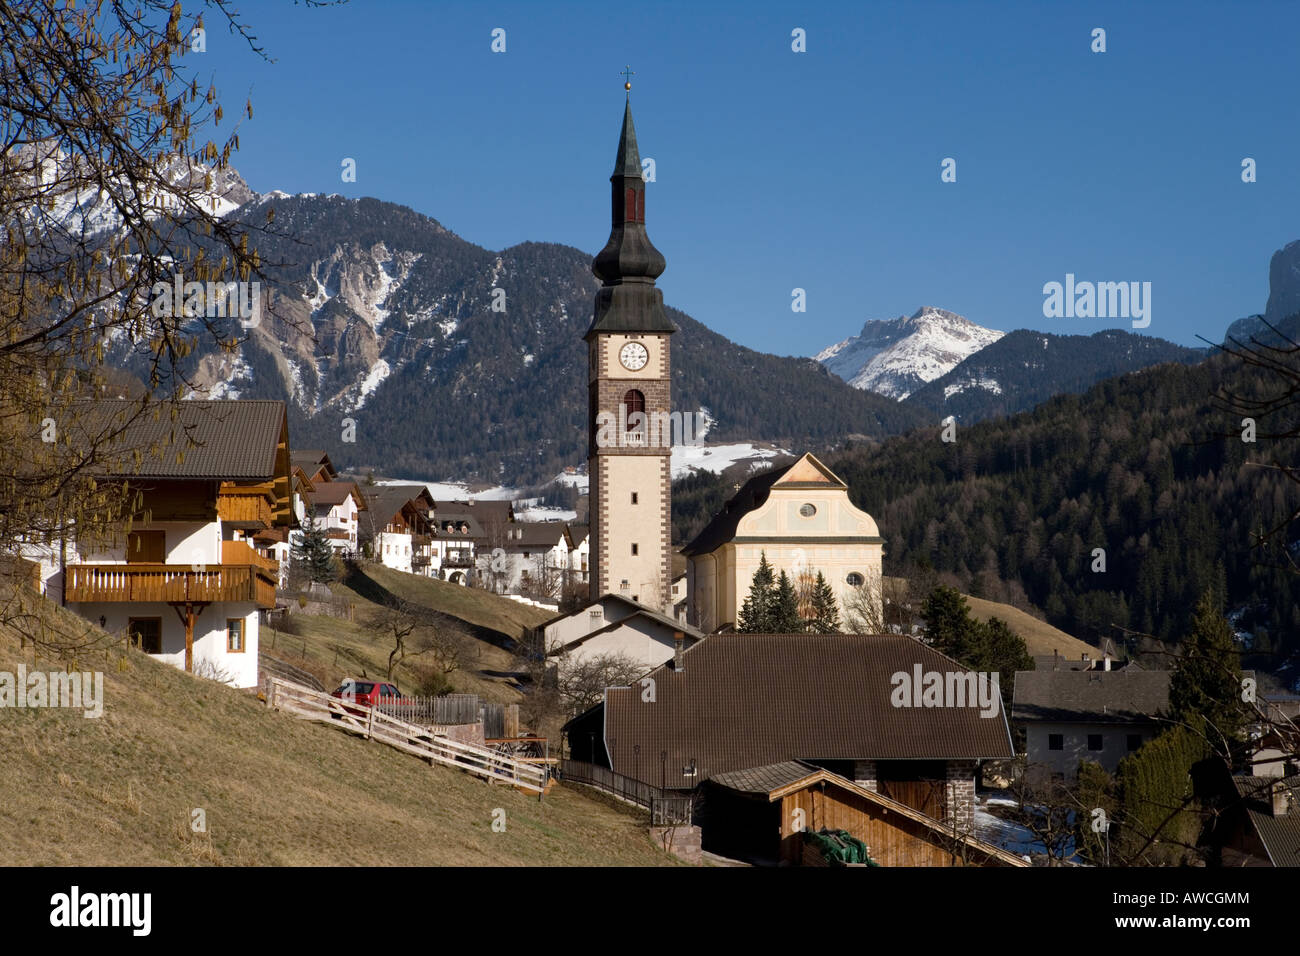 Village alpin de Saint Peter, Val di funes , Italie Banque D'Images